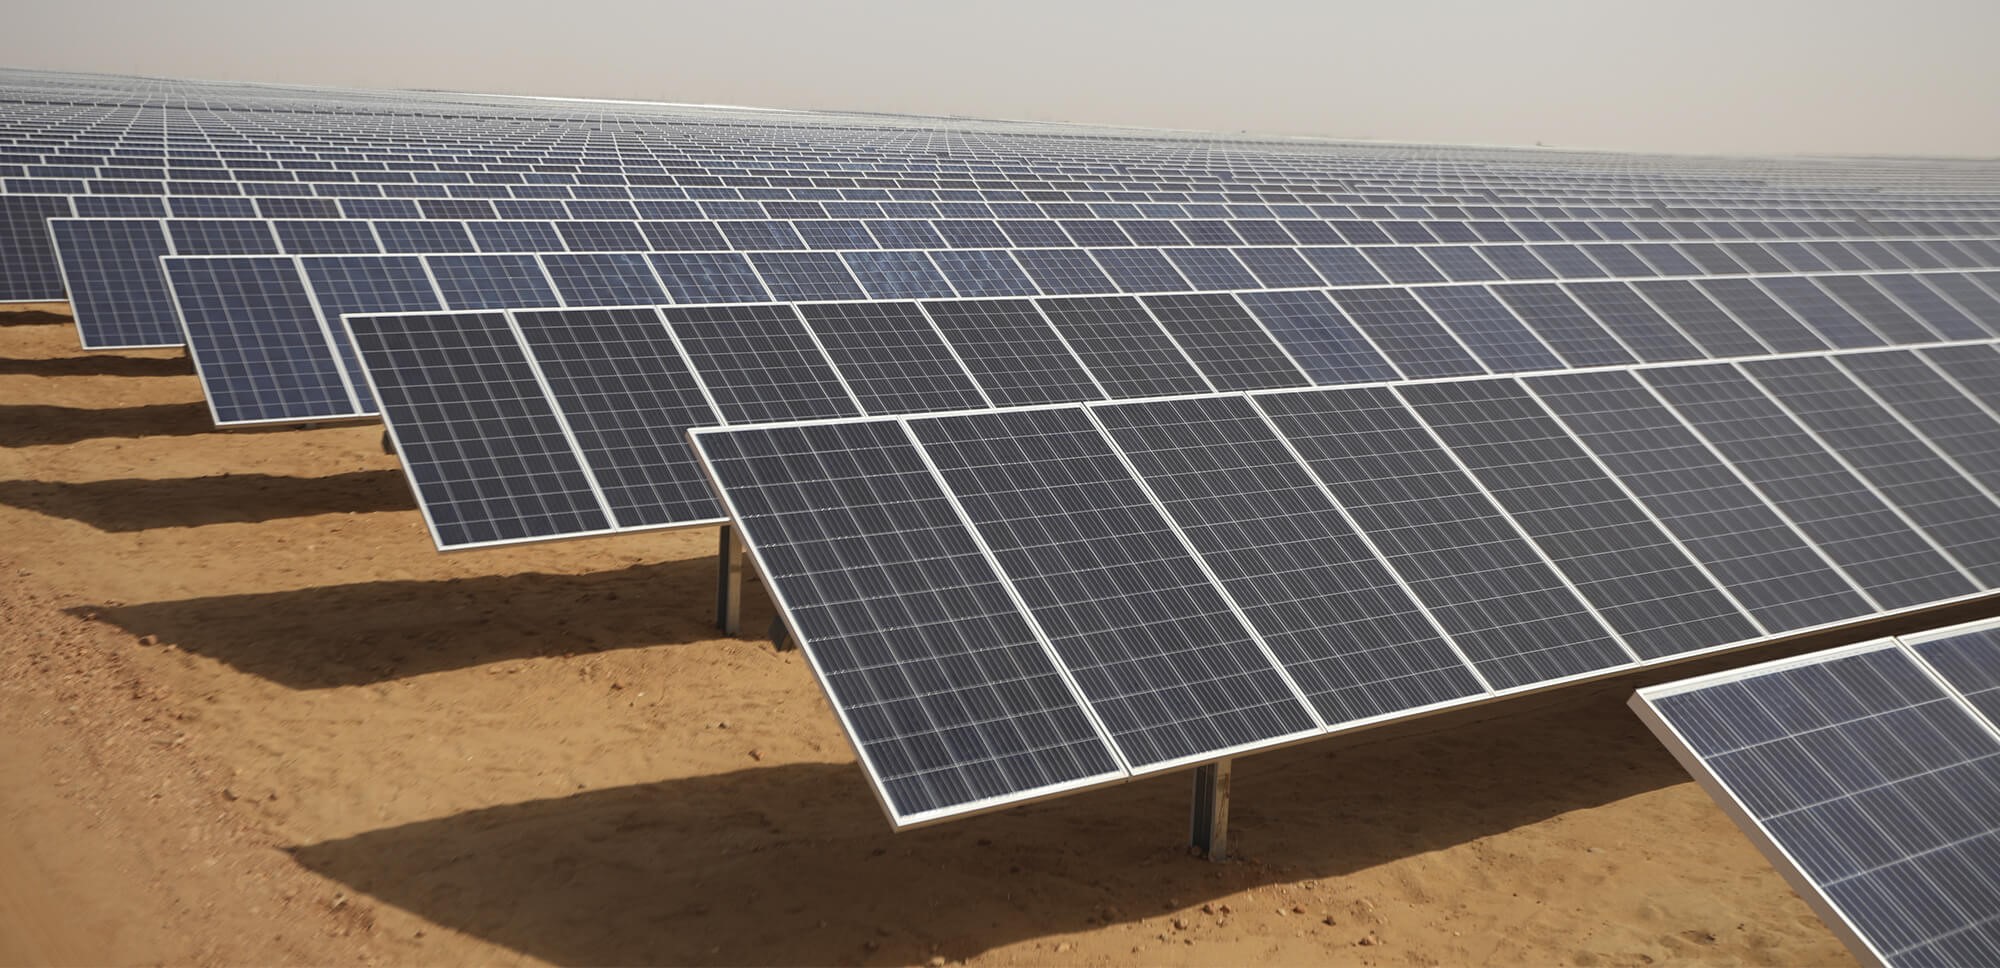 Acciona Energía通过一个新项目进入印度太阳能市场